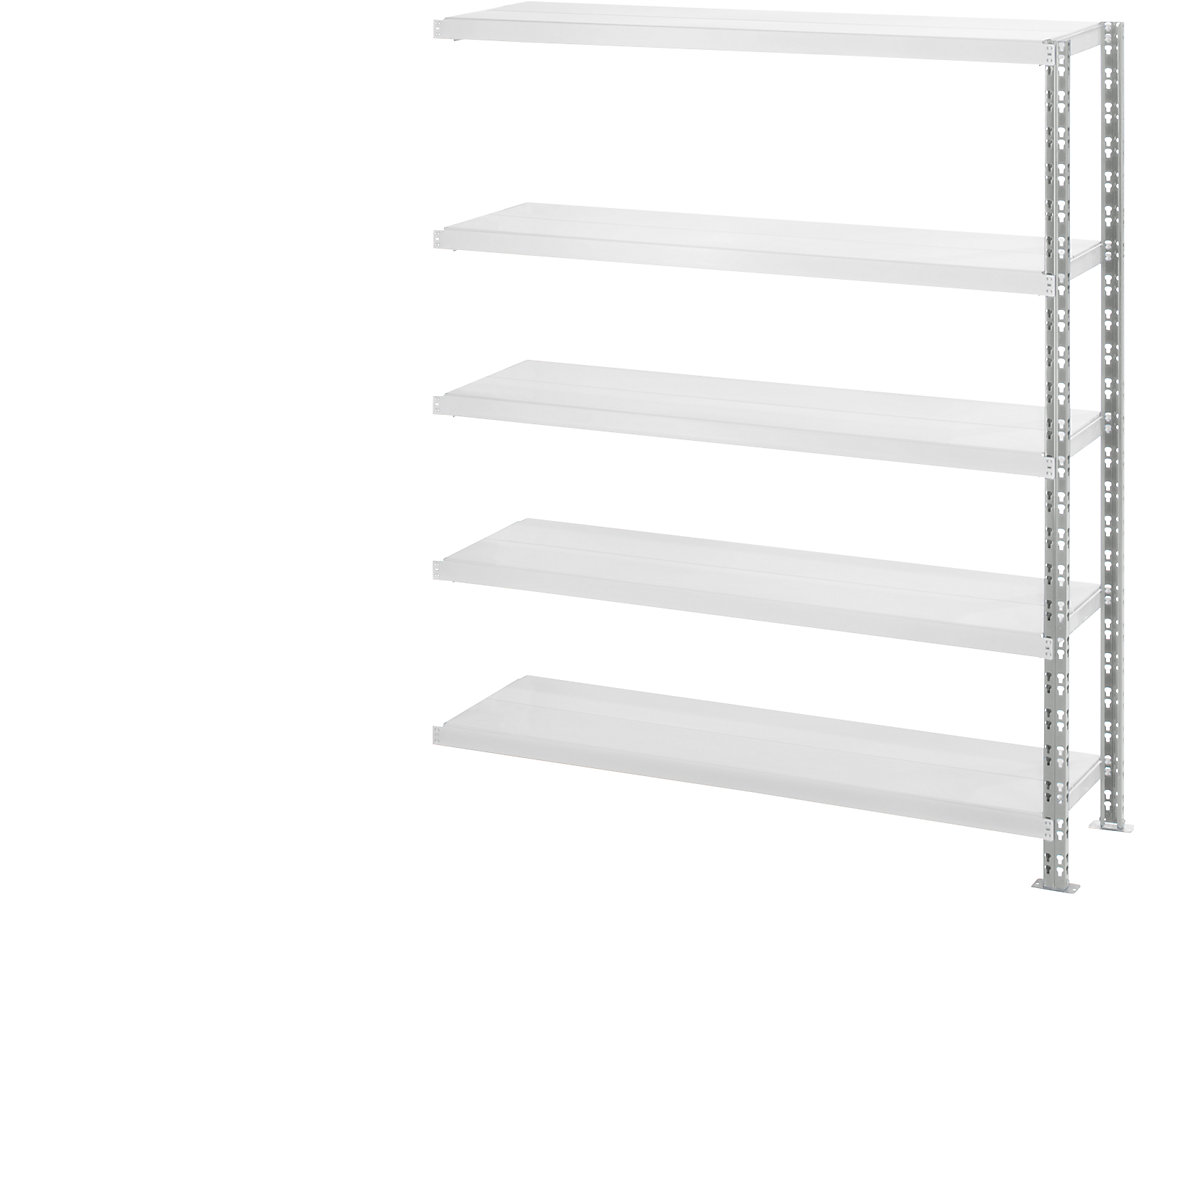 Wide span shelf unit with sheet steel shelves, depth 400 mm, extension shelf unit, HxW 1820 x 1525 mm